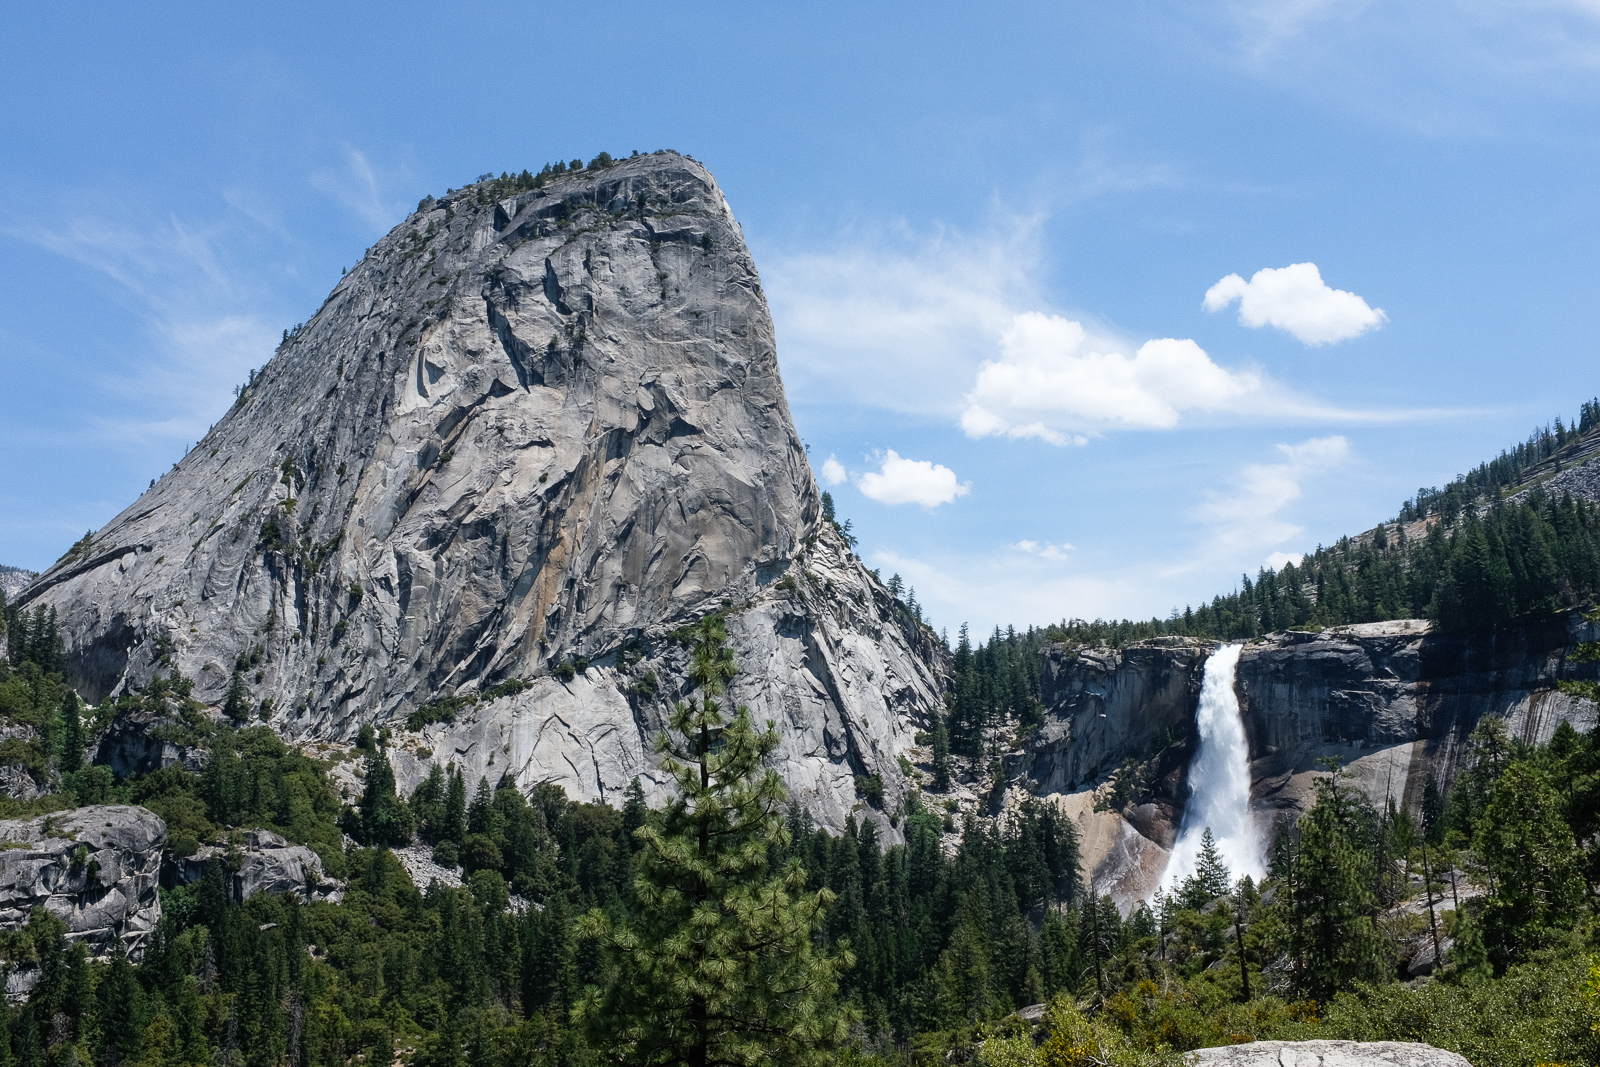  Yosemite National Park, California 